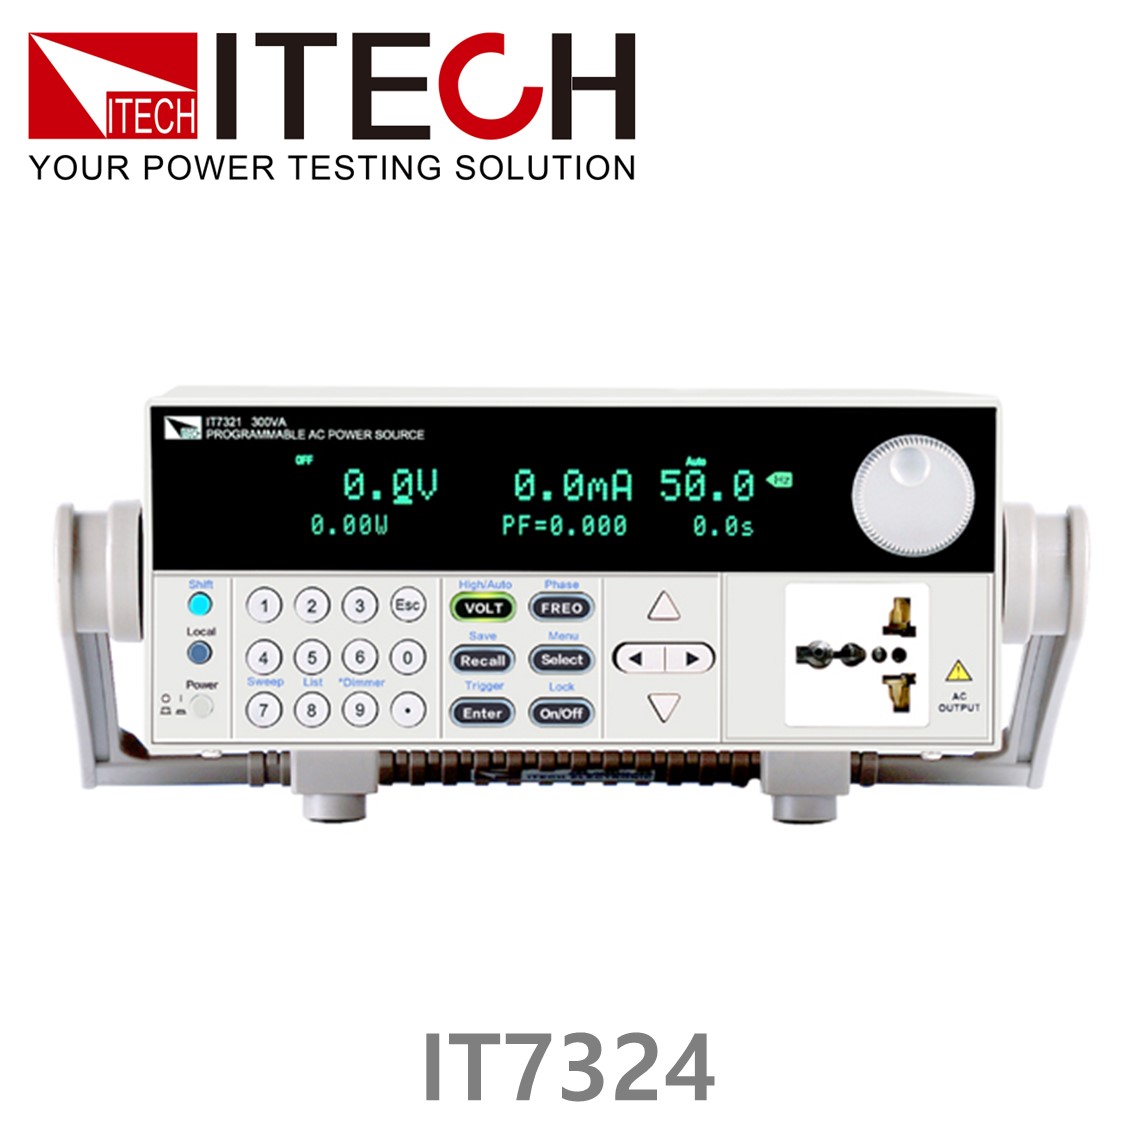 [ ITECH ] IT7324 리니어 프로그래머블 AC전원공급기 150V/300V - 12A/6A - 1500VA (1φ) (3U)